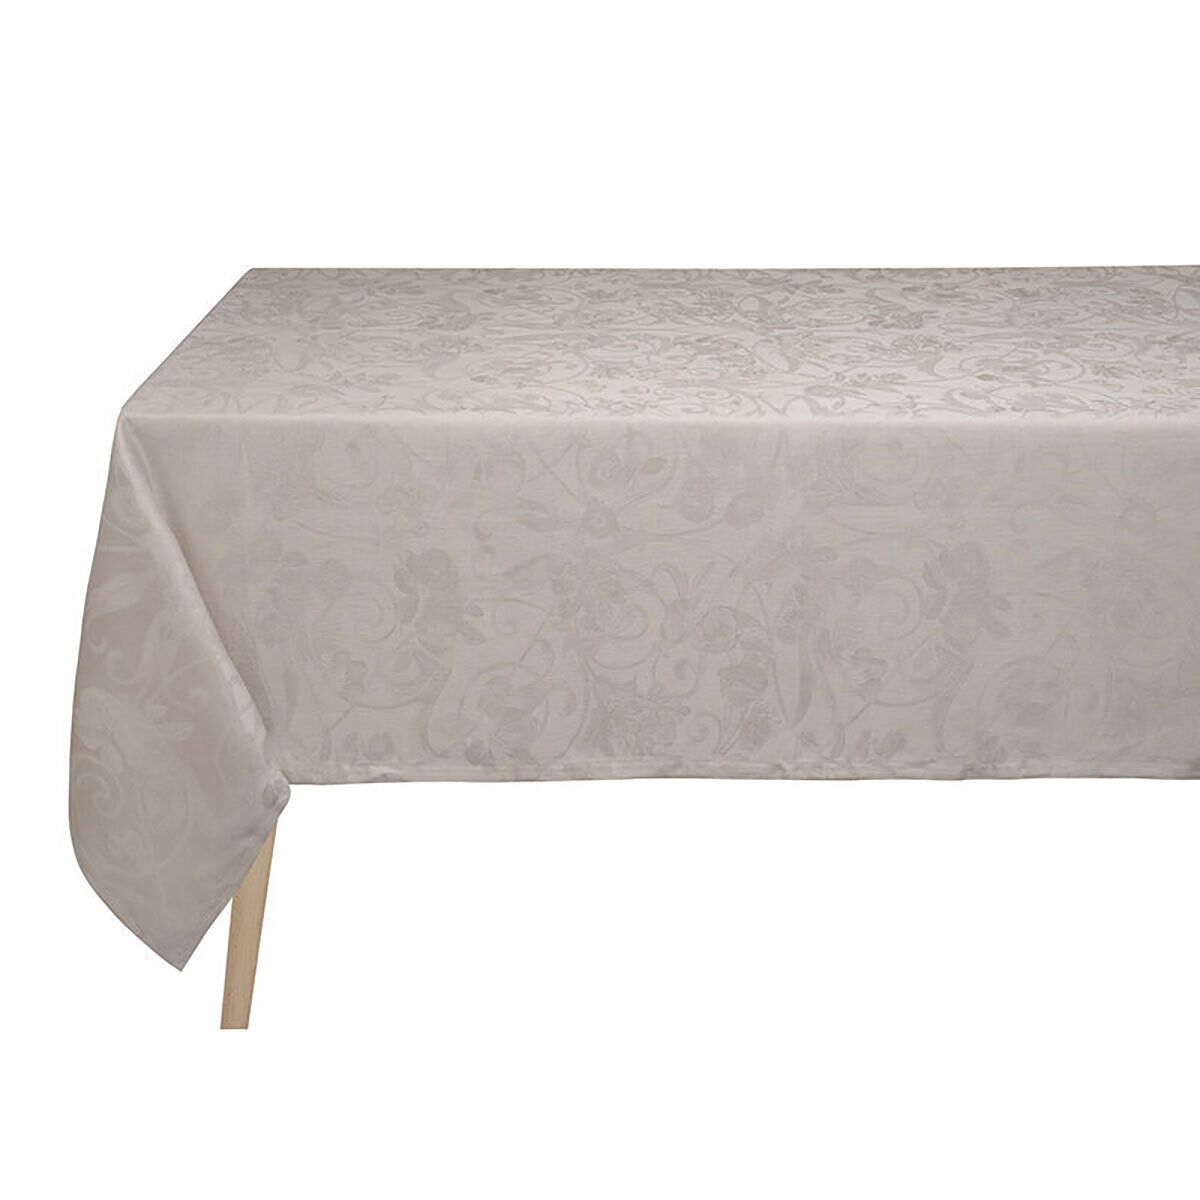 Le Jacquard Francais Tablecloth Tivoli Beige ¯175 100% Linen 69 Inch 28105